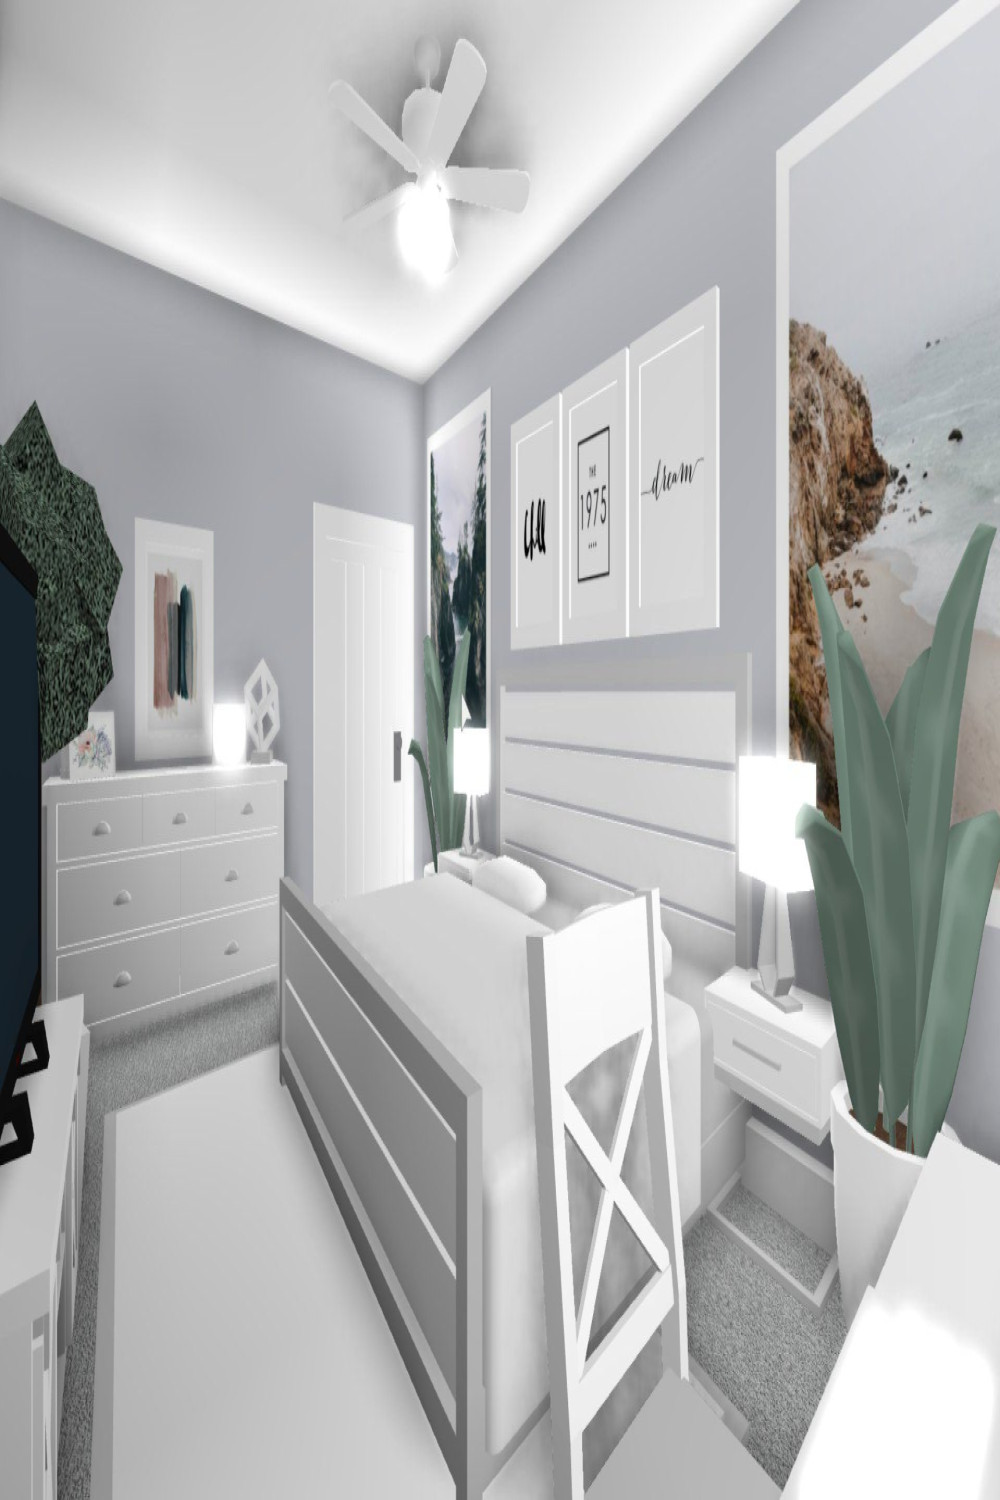 10 Stunning Aesthetic Bloxburg Master Bedroom Ideas That Will Make You ...